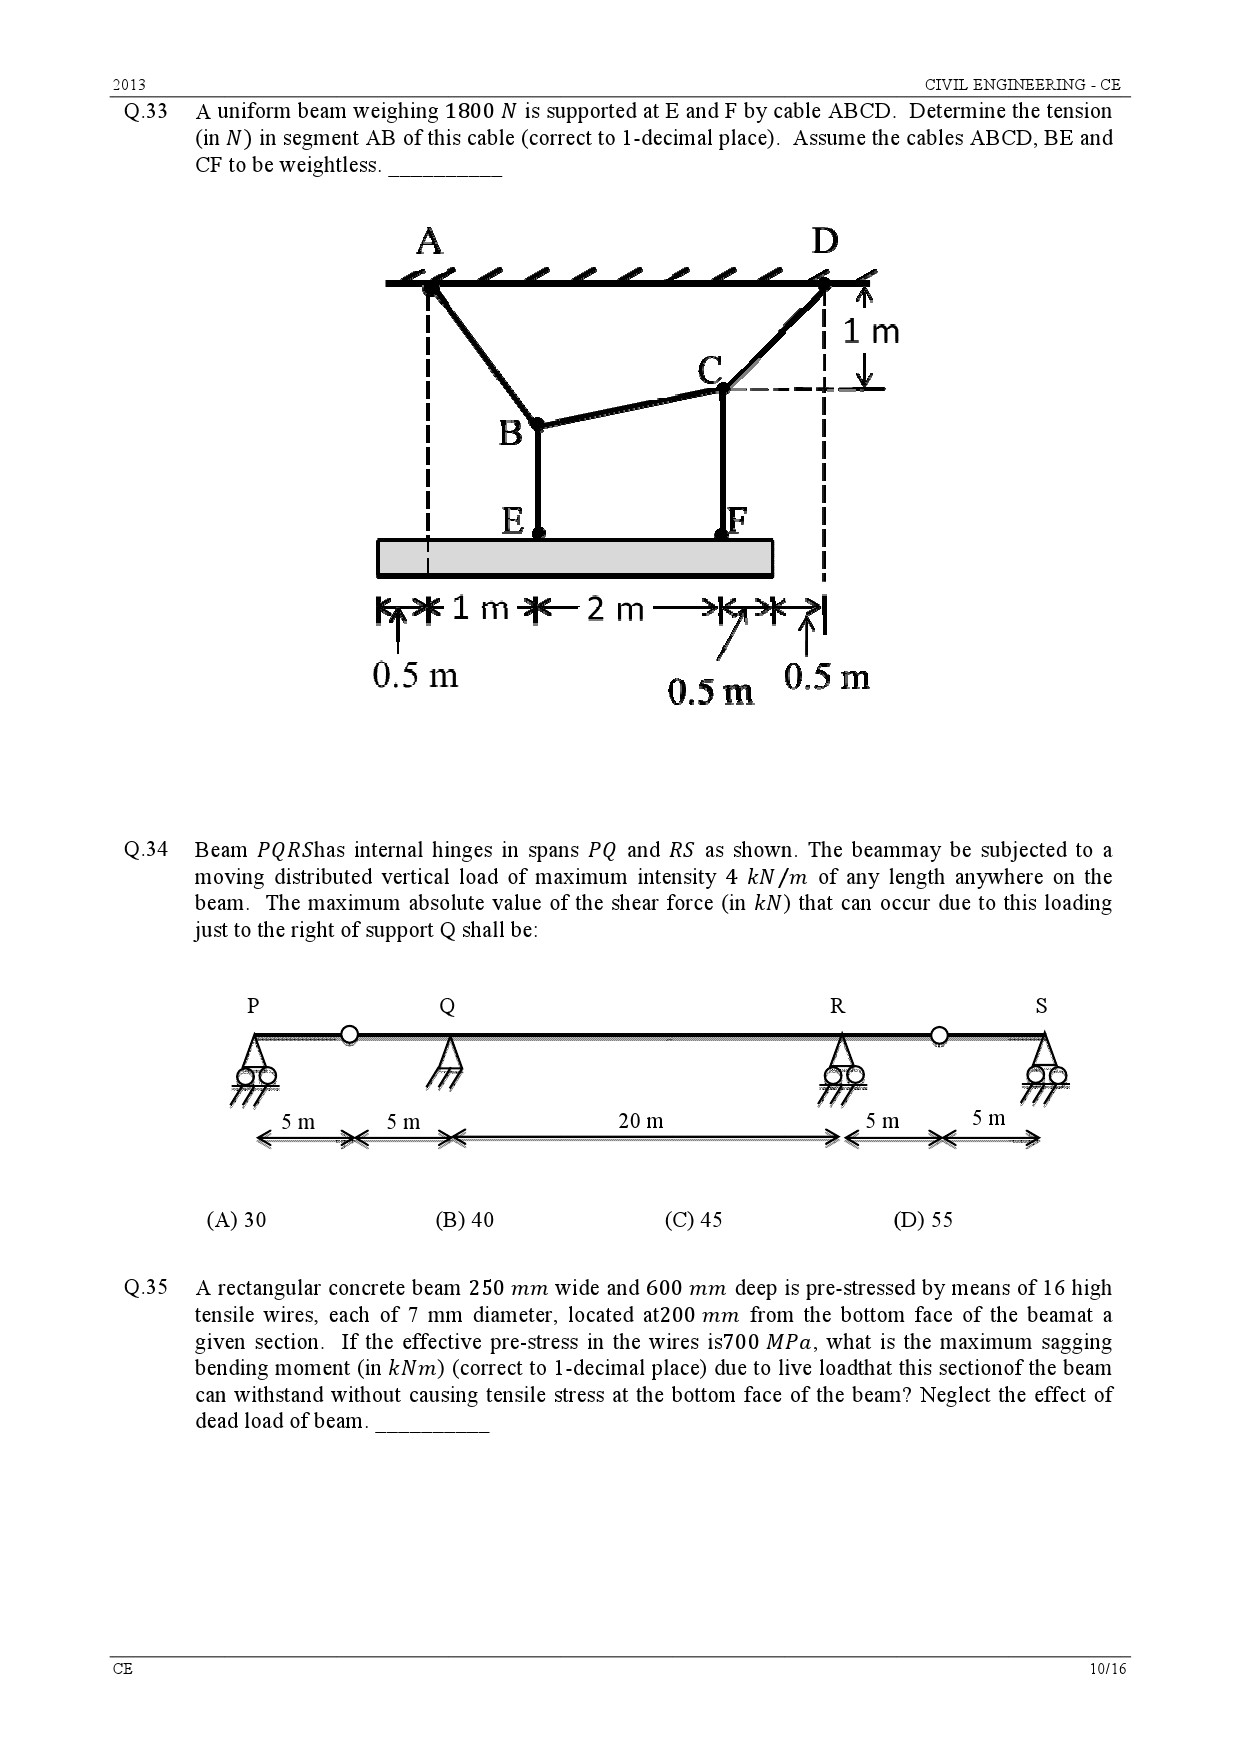 GATE Exam Question Paper 2013 Civil Engineering 10